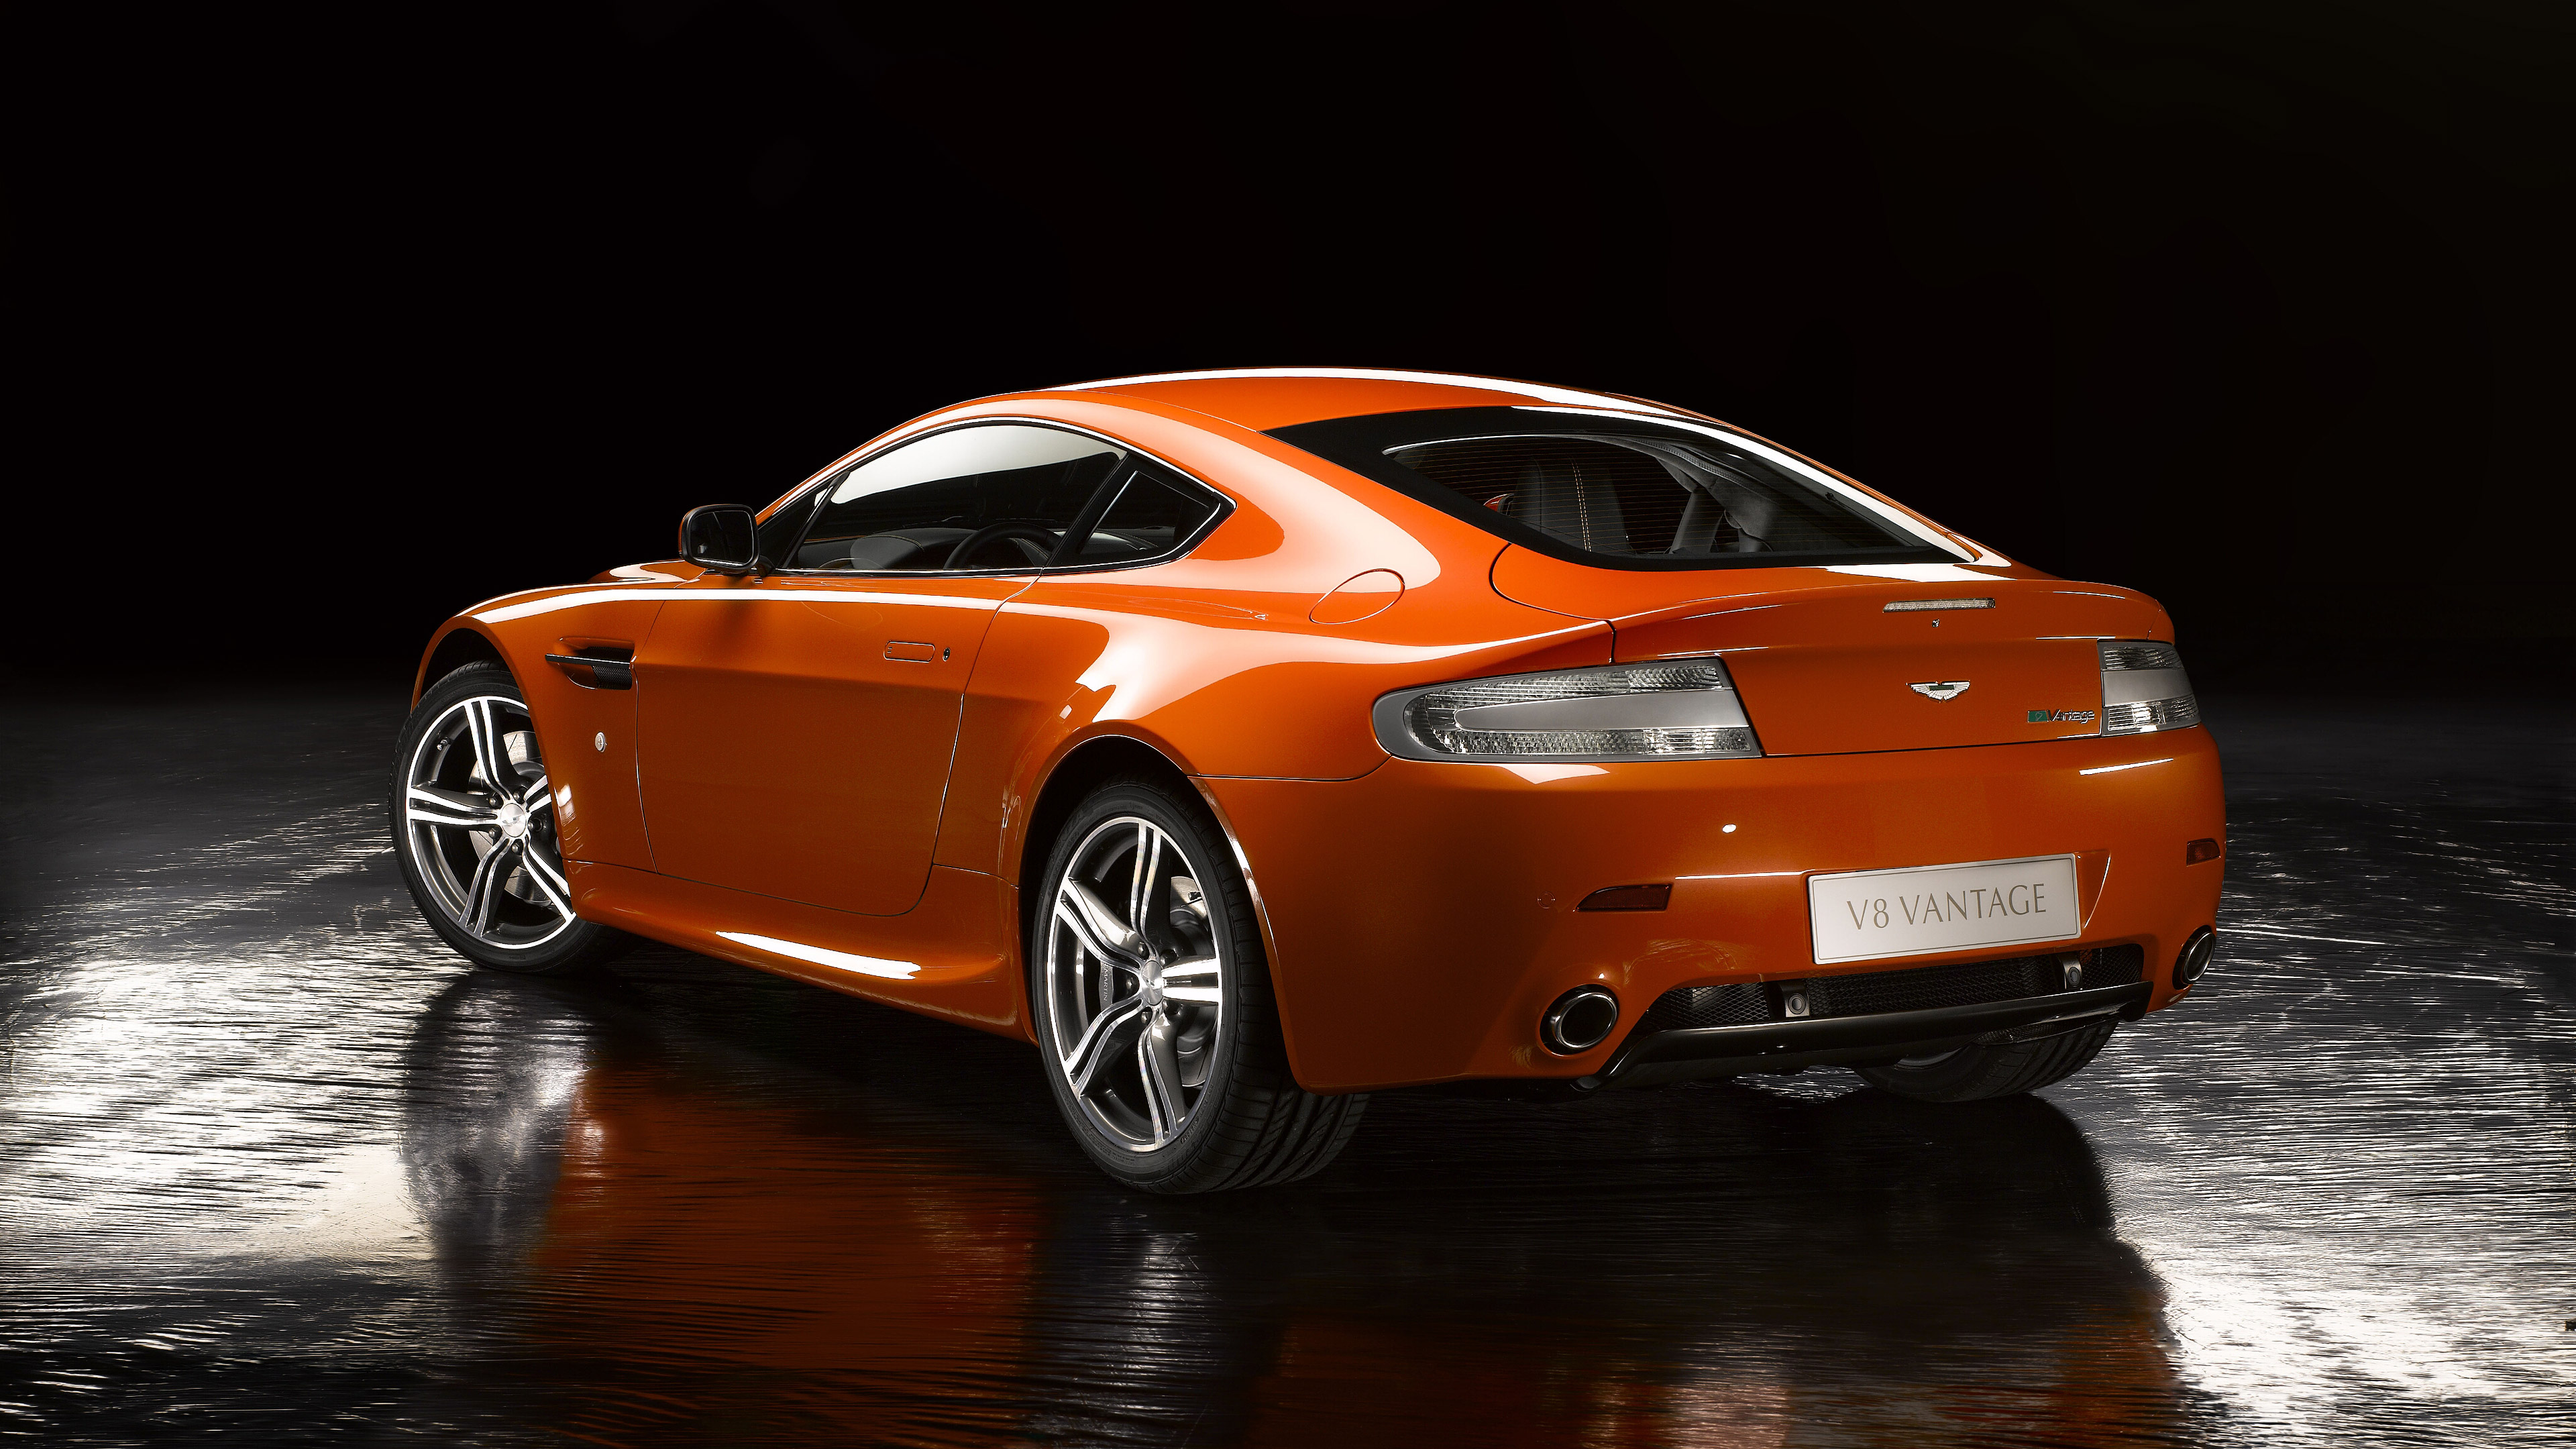 Aston Martin V8 Vantage N400 Luxury Car Grand Tourer Coupe Orange Car Car 3840x2160